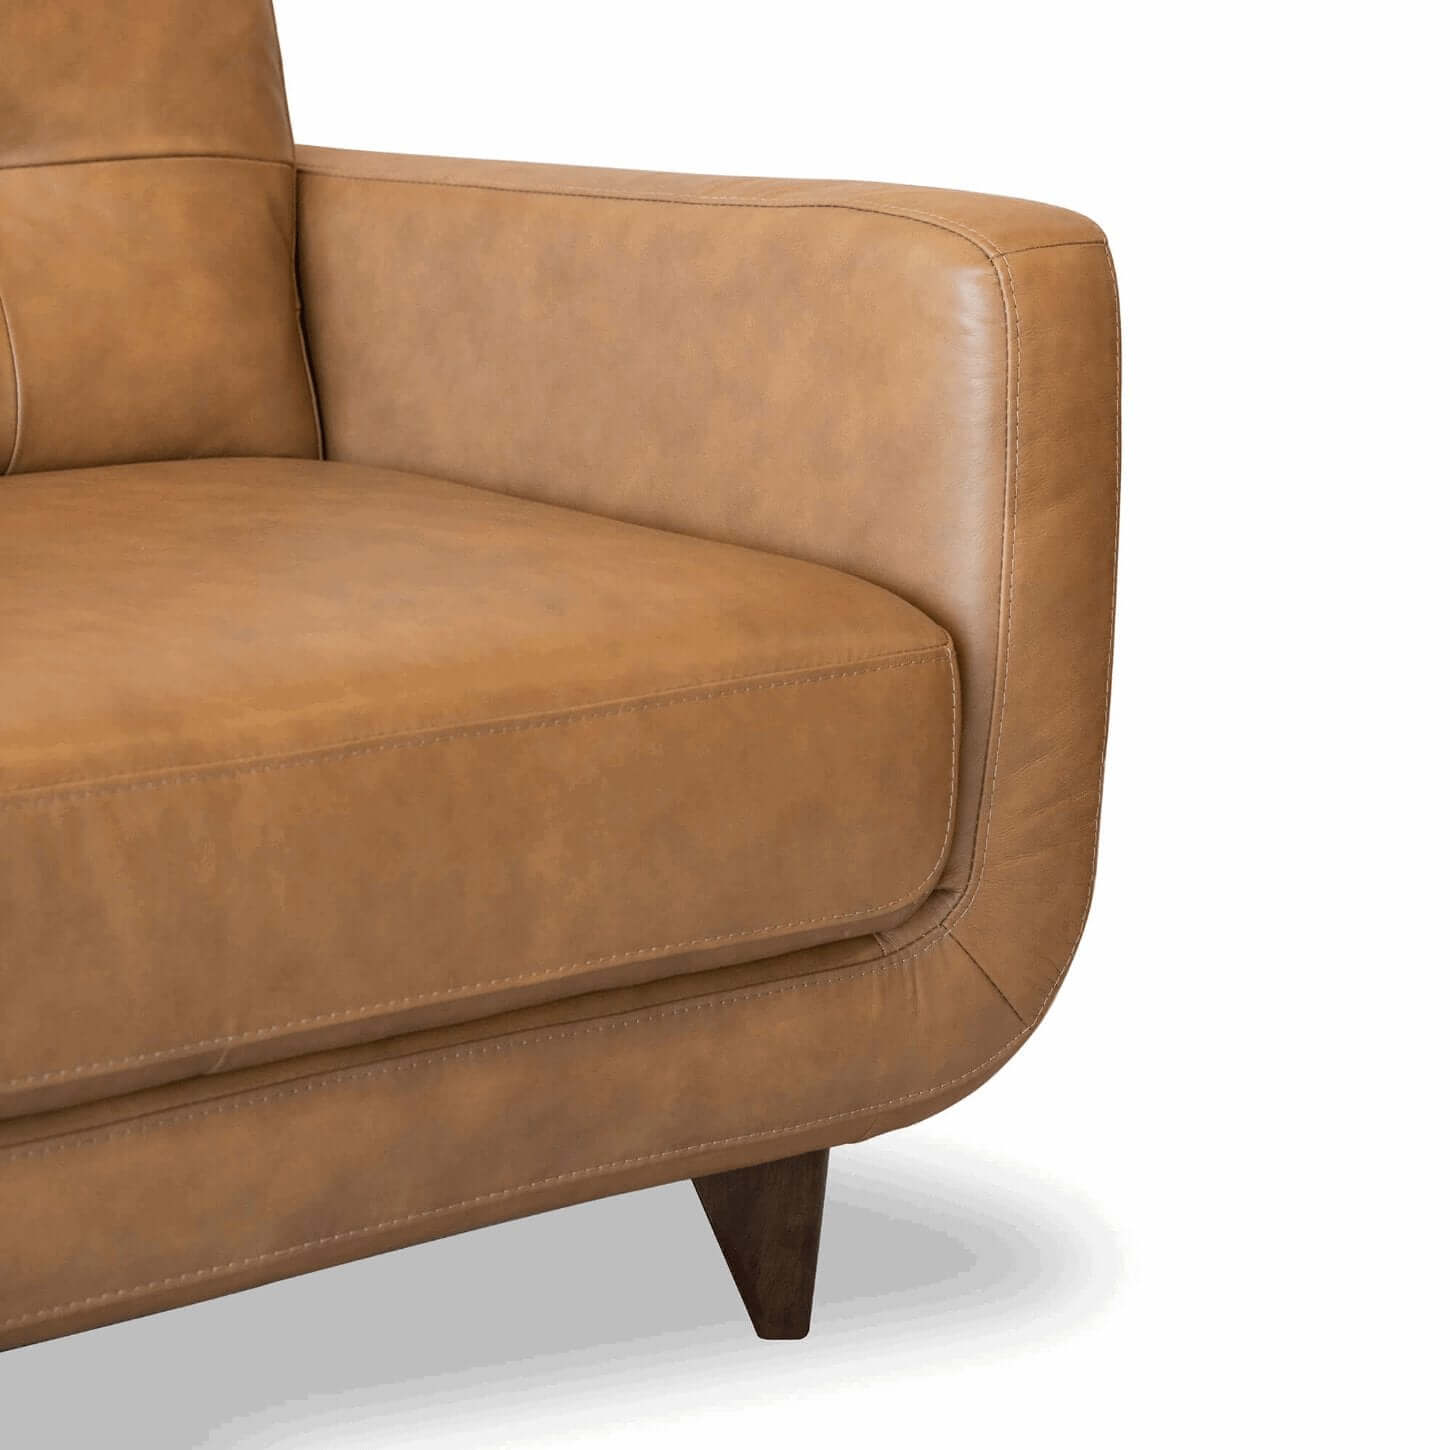 Allison MCM Style Tufted Genuine Leather Sofa 84" - Revel Sofa 